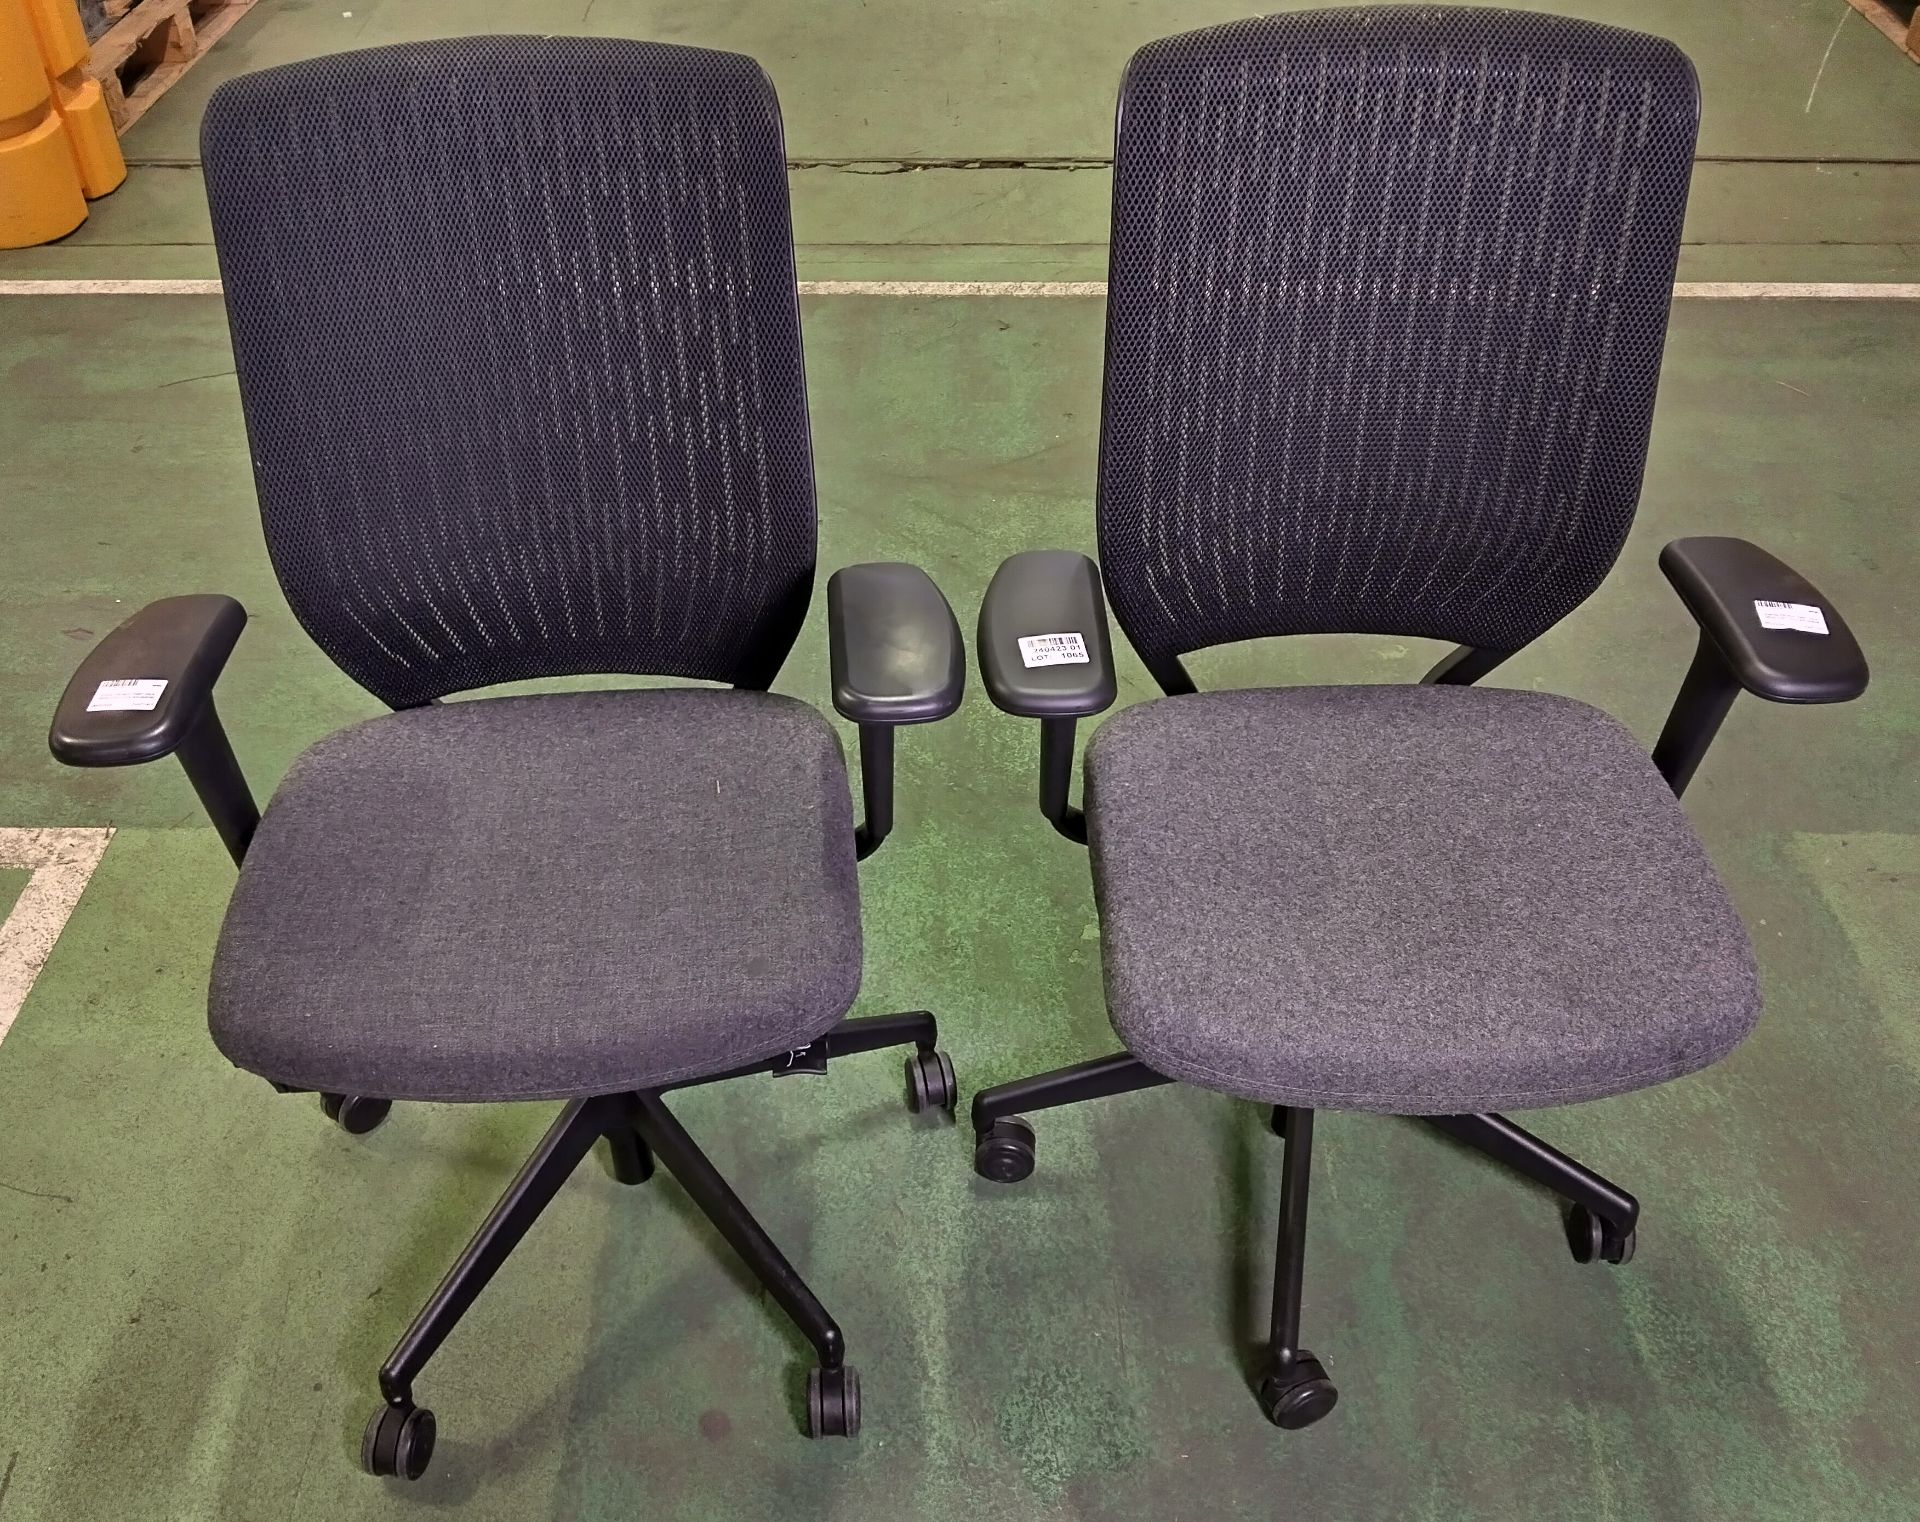 2x Evolve Senator mesh back office chairs - fully adjustable